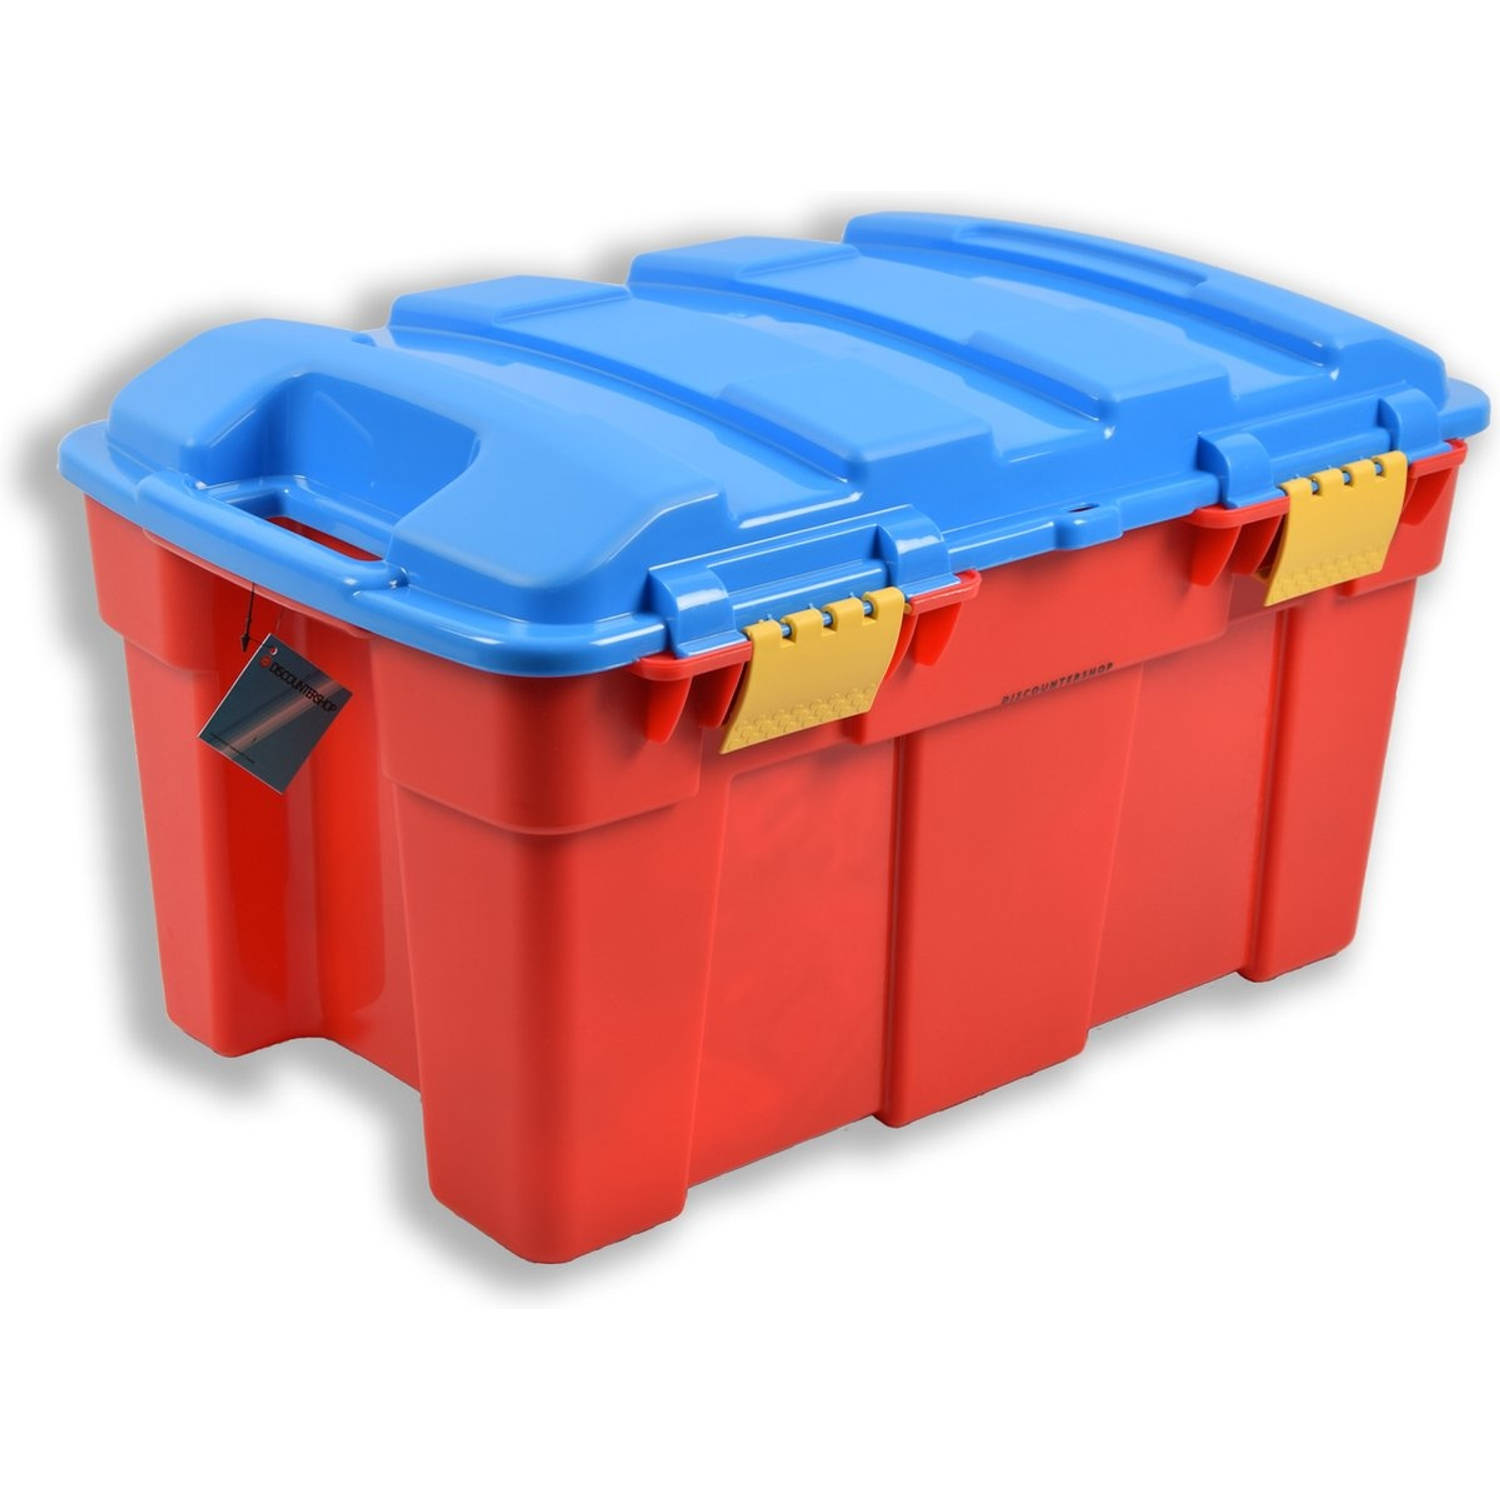 Vervoer Vochtig Lenen Stevige opberger 40 L Rood & Blauw opbergbox kofferbak kinderspeelgoed  gereedschap lego Boeken Opbergdoos | Blokker